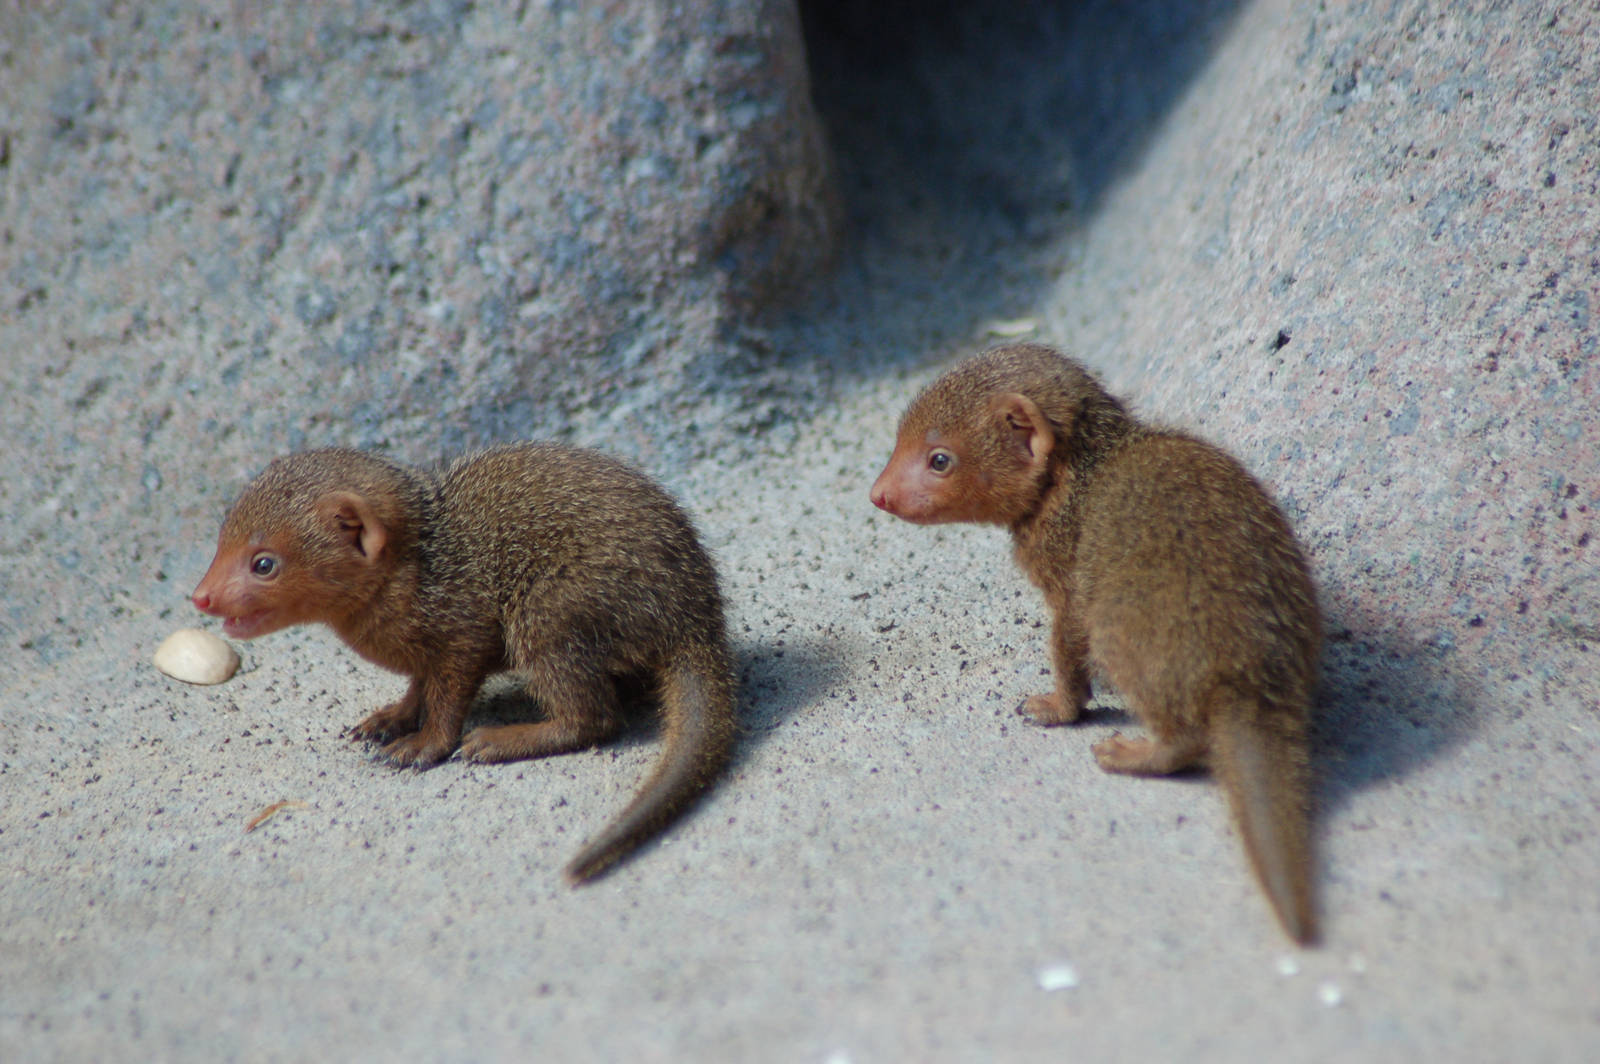 Mongoose filios terræ consurgere facis